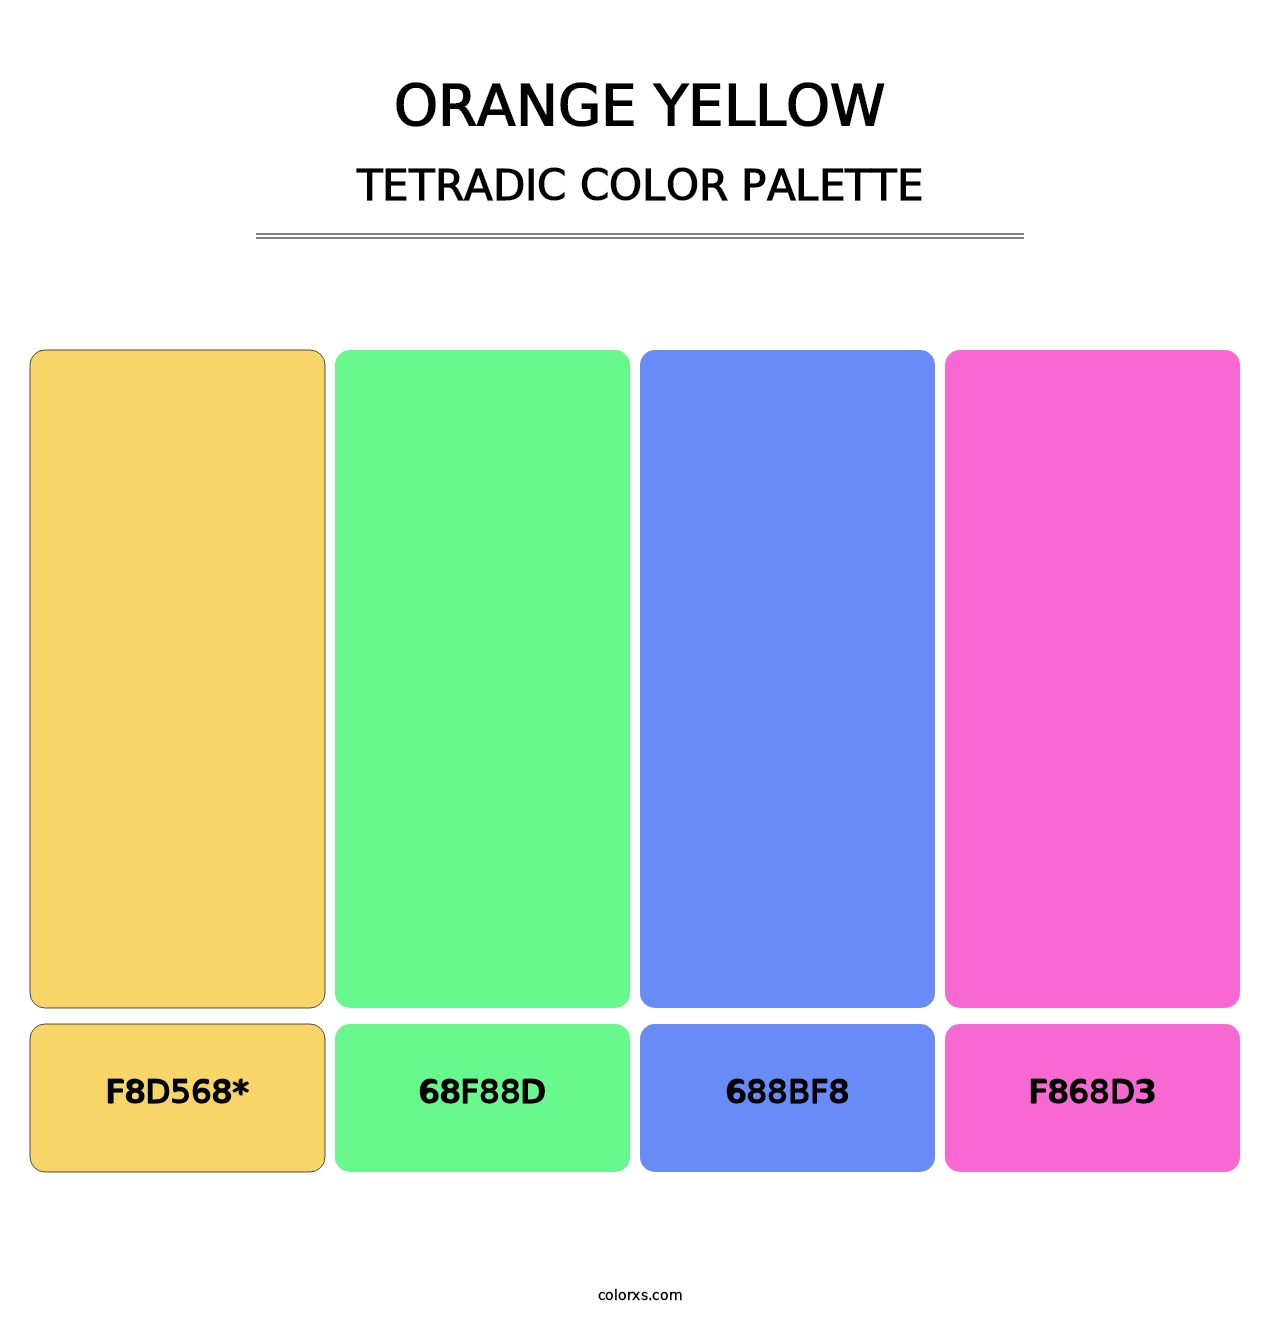 Orange Yellow - Tetradic Color Palette